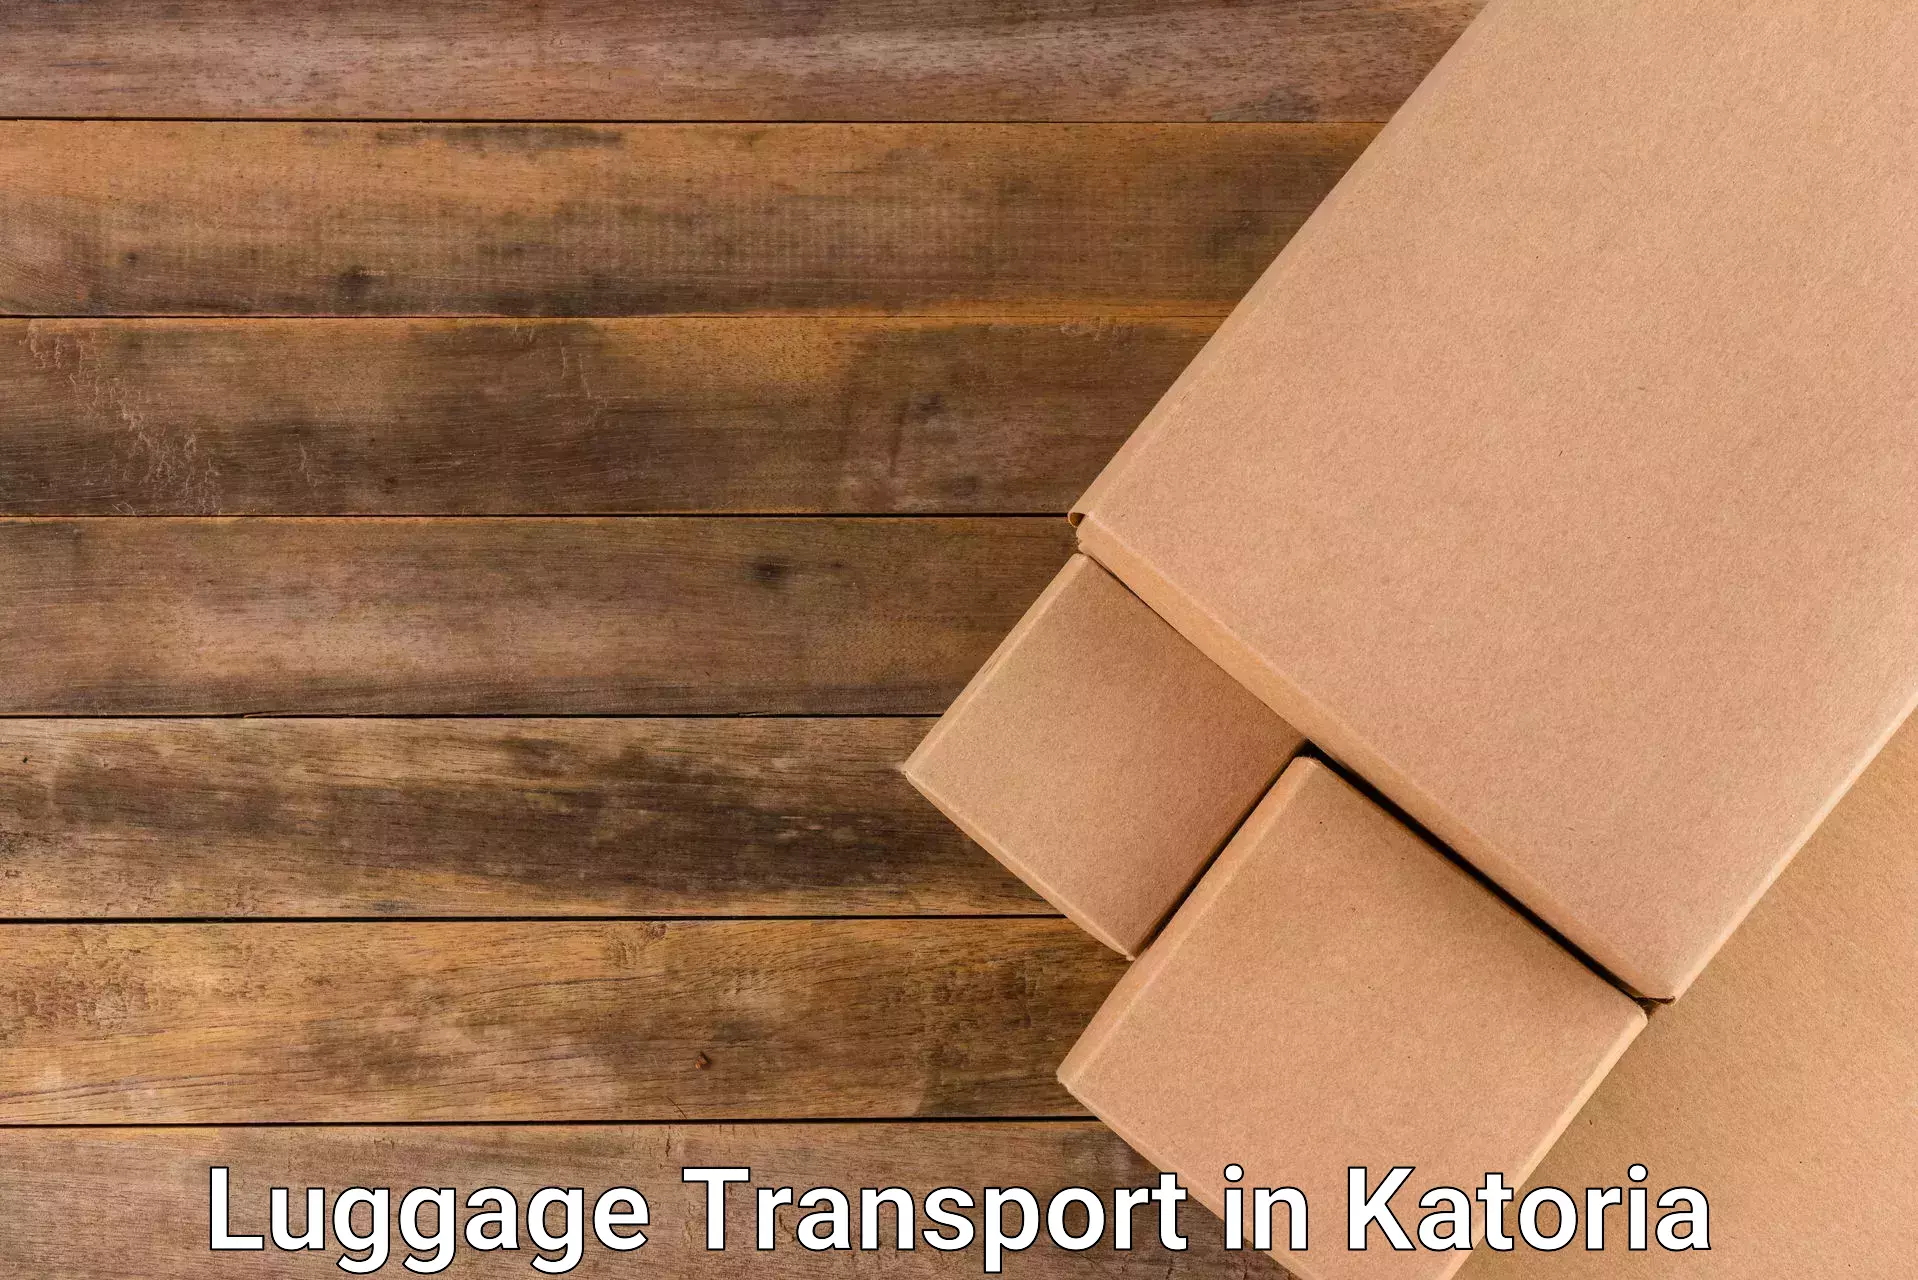 Luggage dispatch service in Katoria